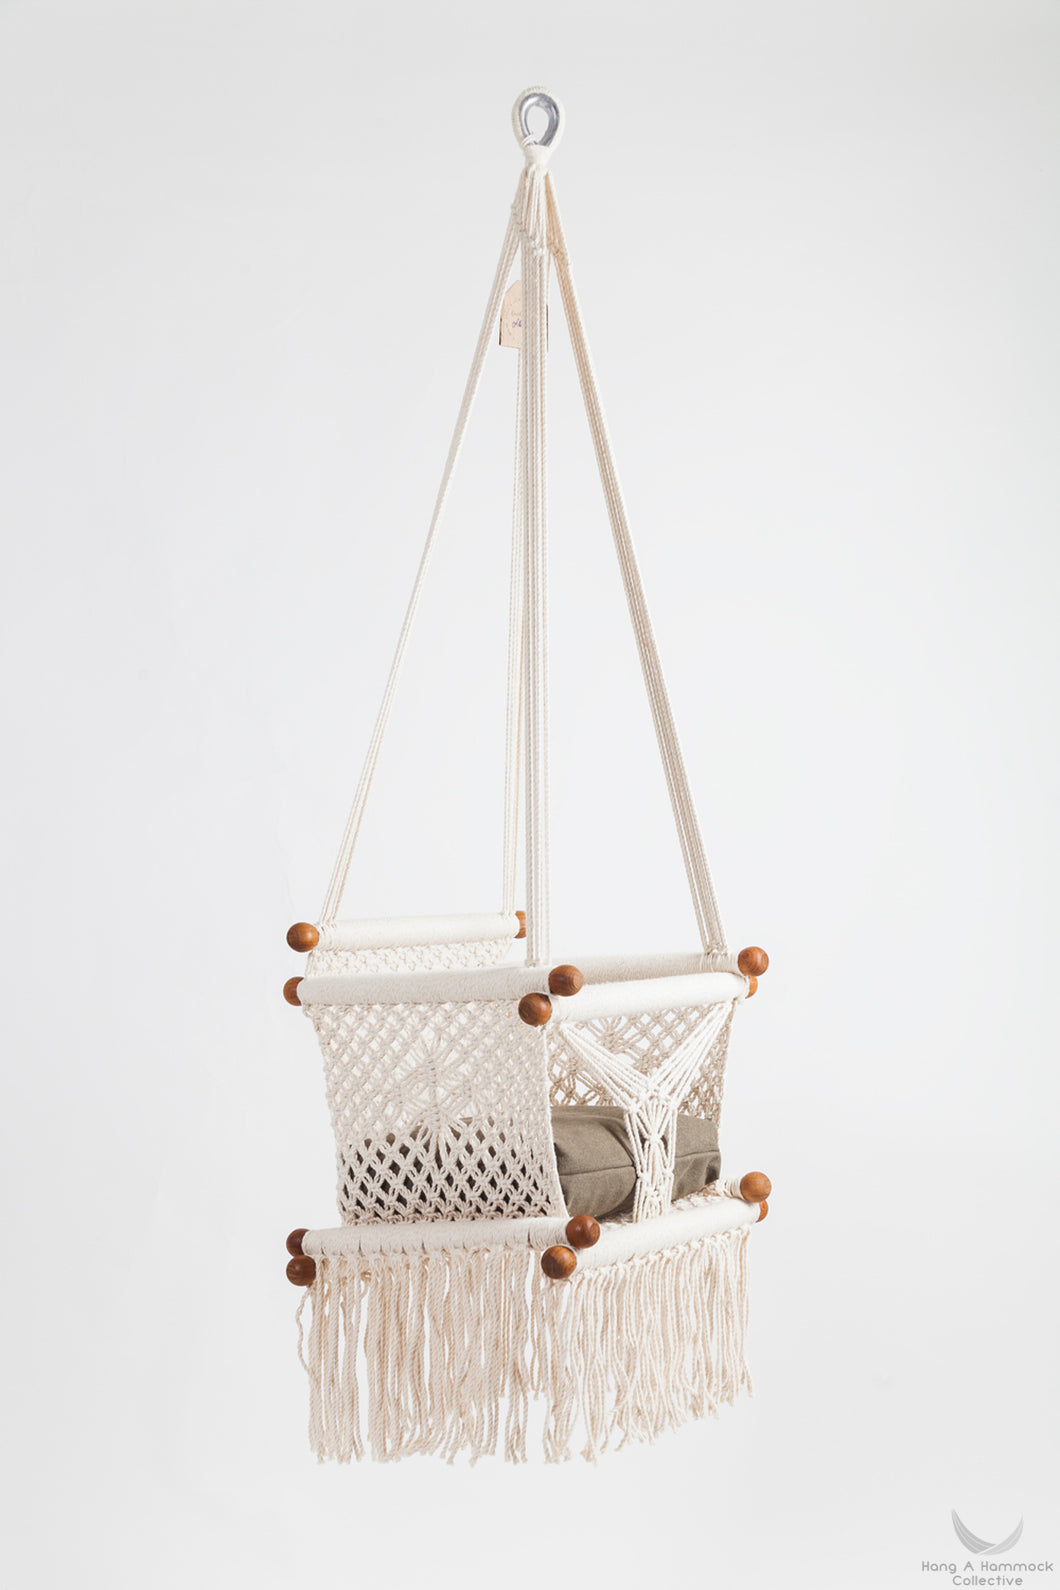 Timber & Cotton Baby Swing Chair. Natural. hangahammockcollective